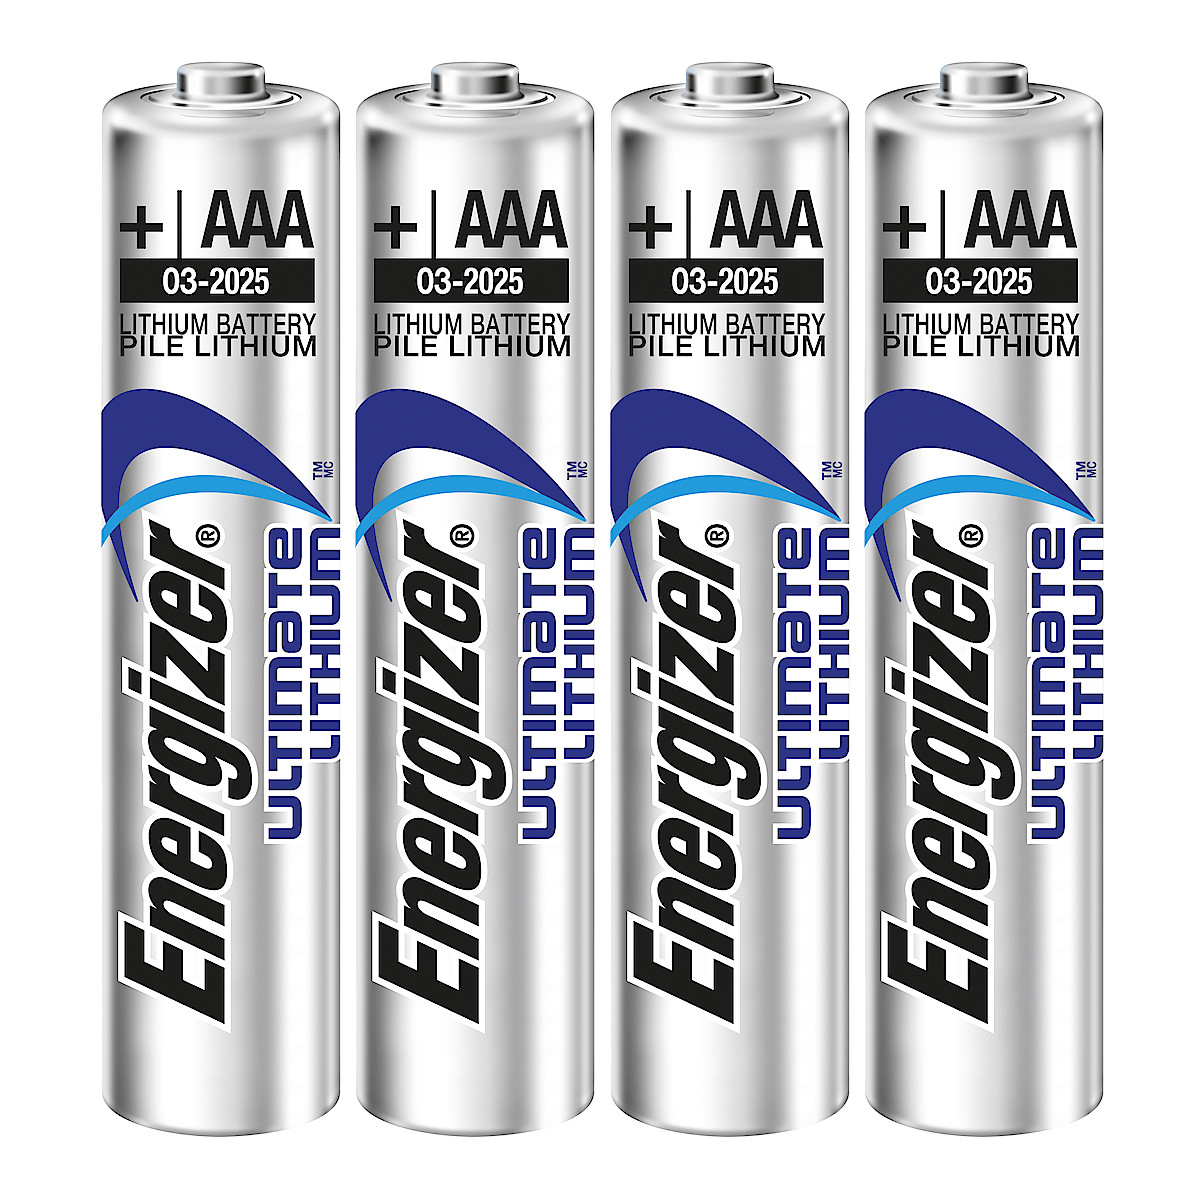 Aaa battery. Батарейки АА 1.5 литиевые Енергизер. Батарейки энерджайзер ААА литиевые. Батареи литиевые 1.5v ААА. Energizer Ultimate Lithium.